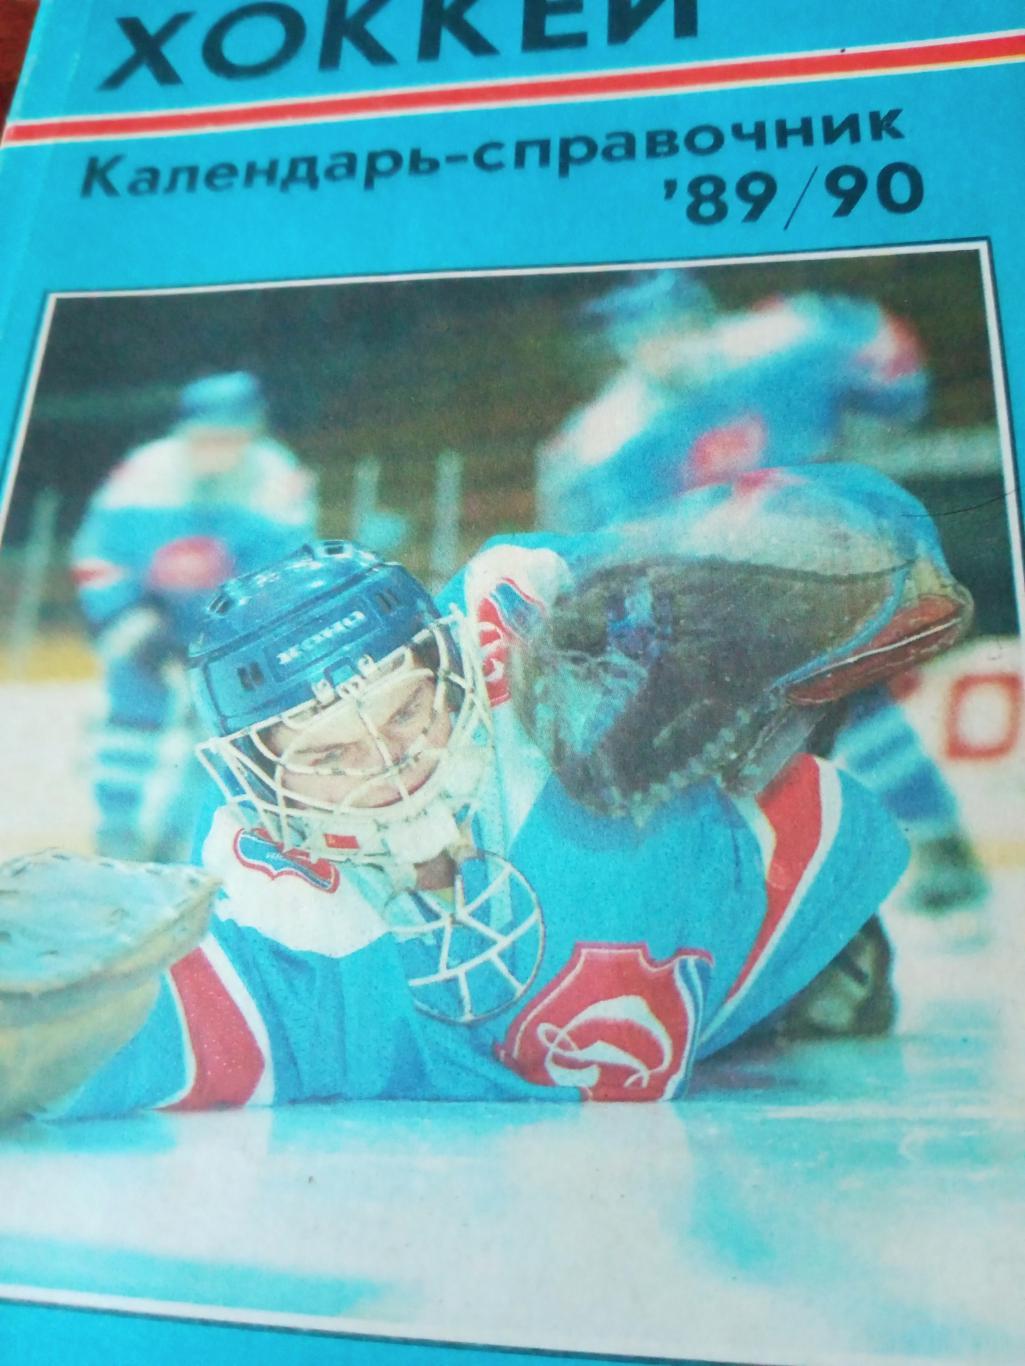 Хоккей. Рига. 1989/1990 гг